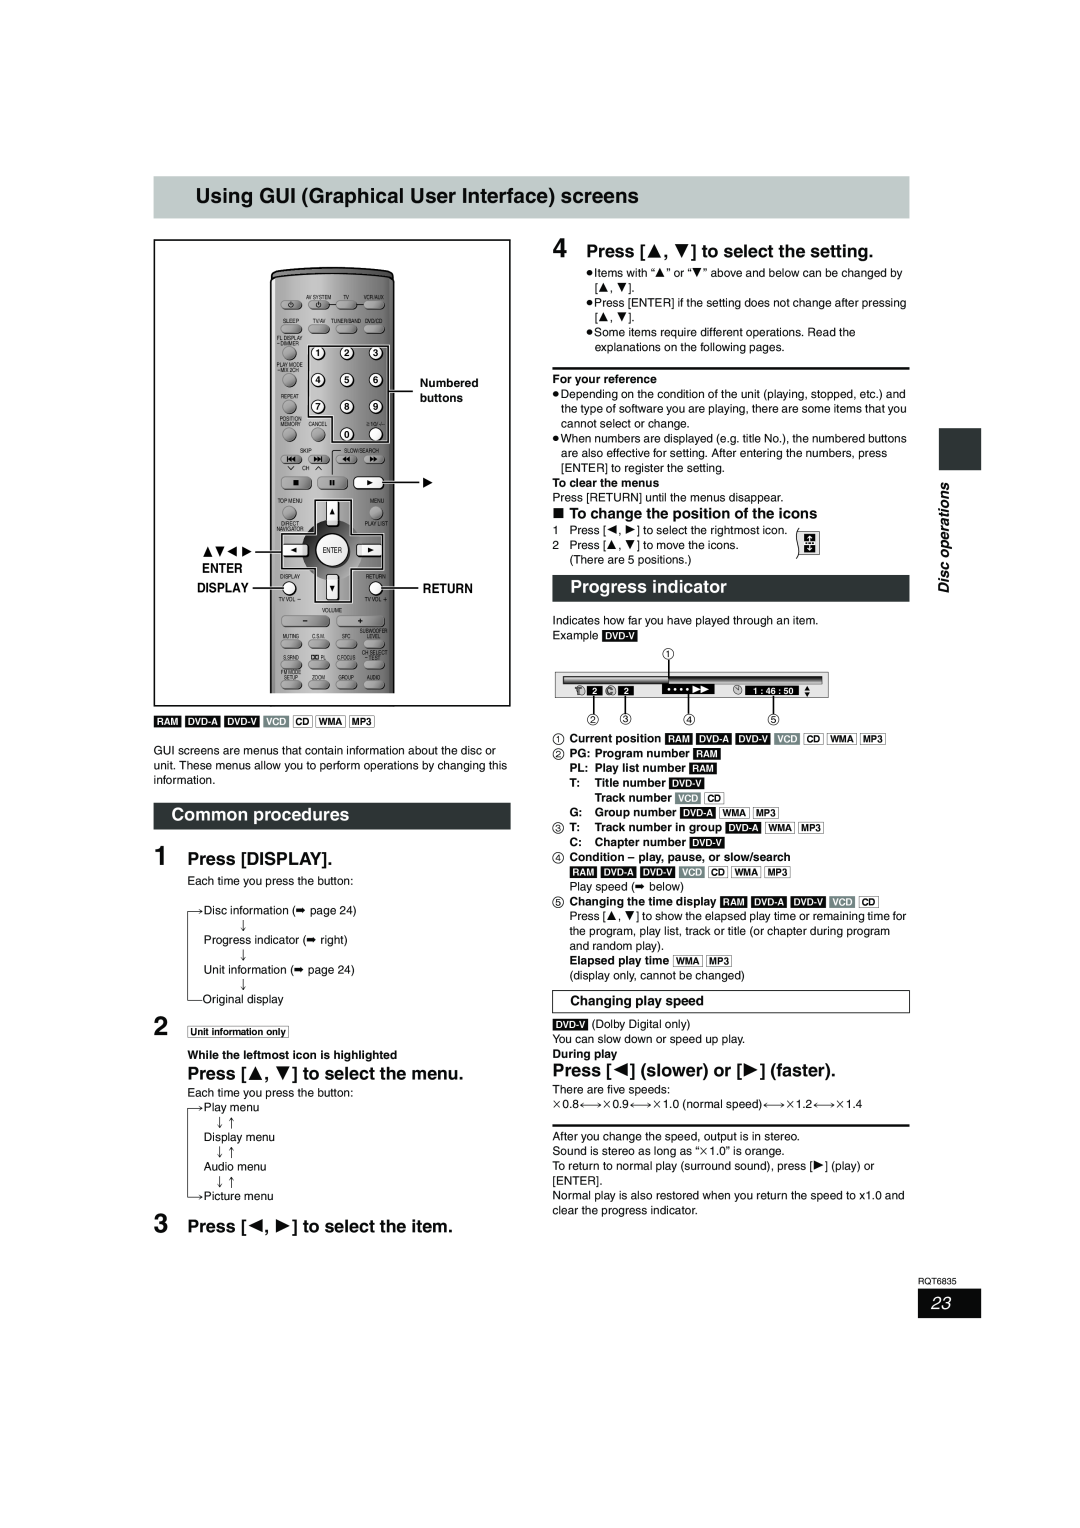 Panasonic SC-HT500 Using GUI Graphical User Interface screens, Common procedures, Press DISPLAY, Progress indicator, Disc 